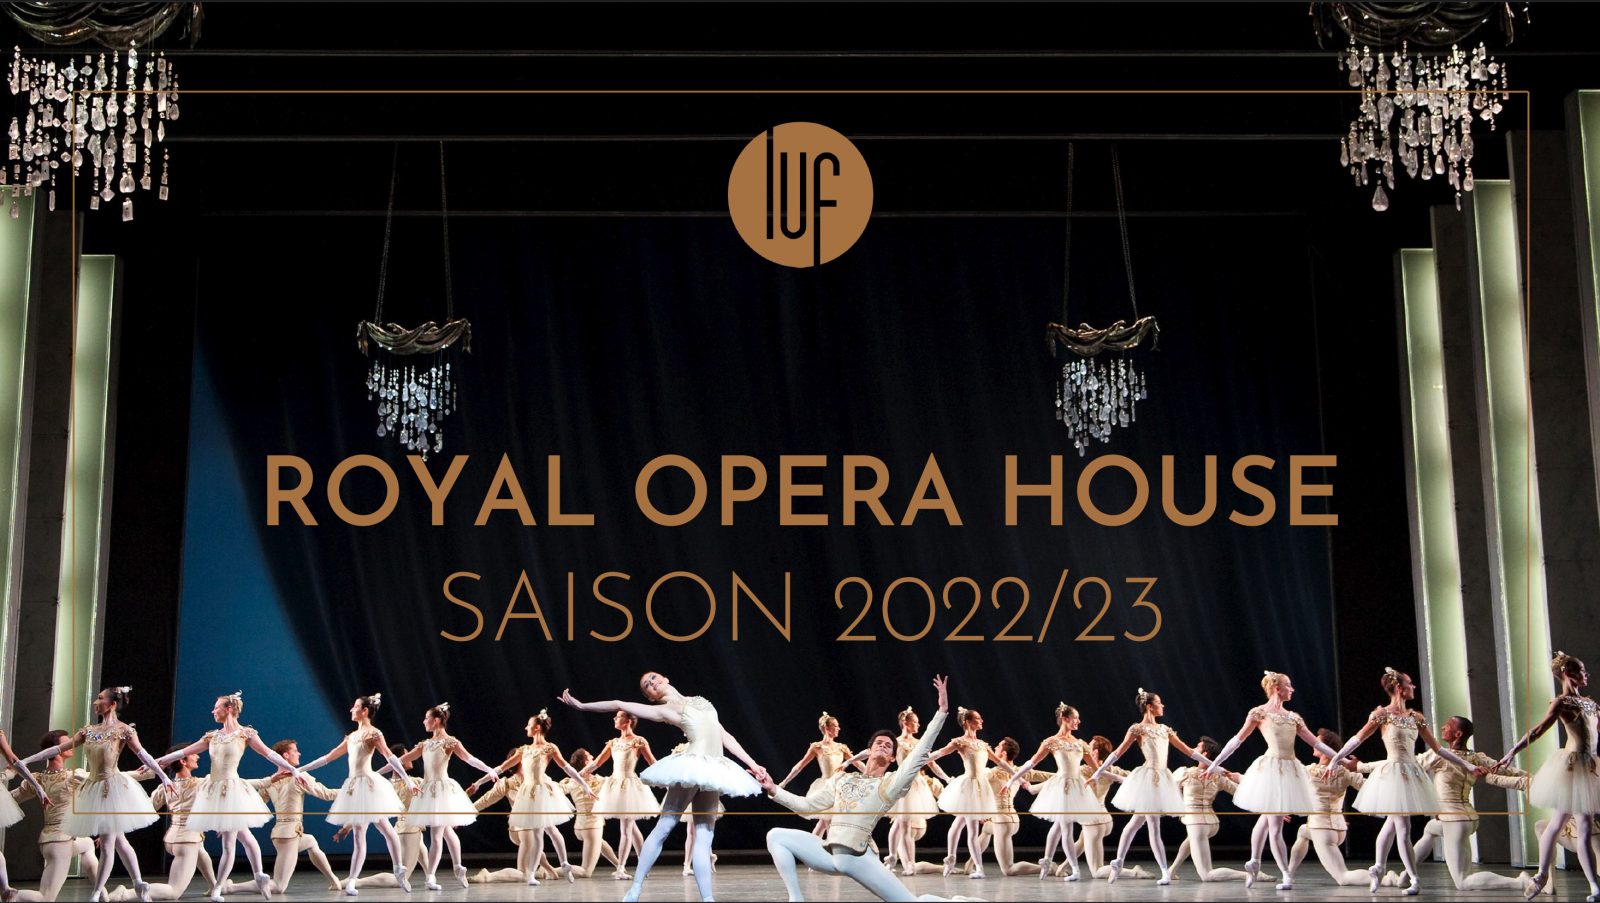 Royal Opera House Saison 22/23